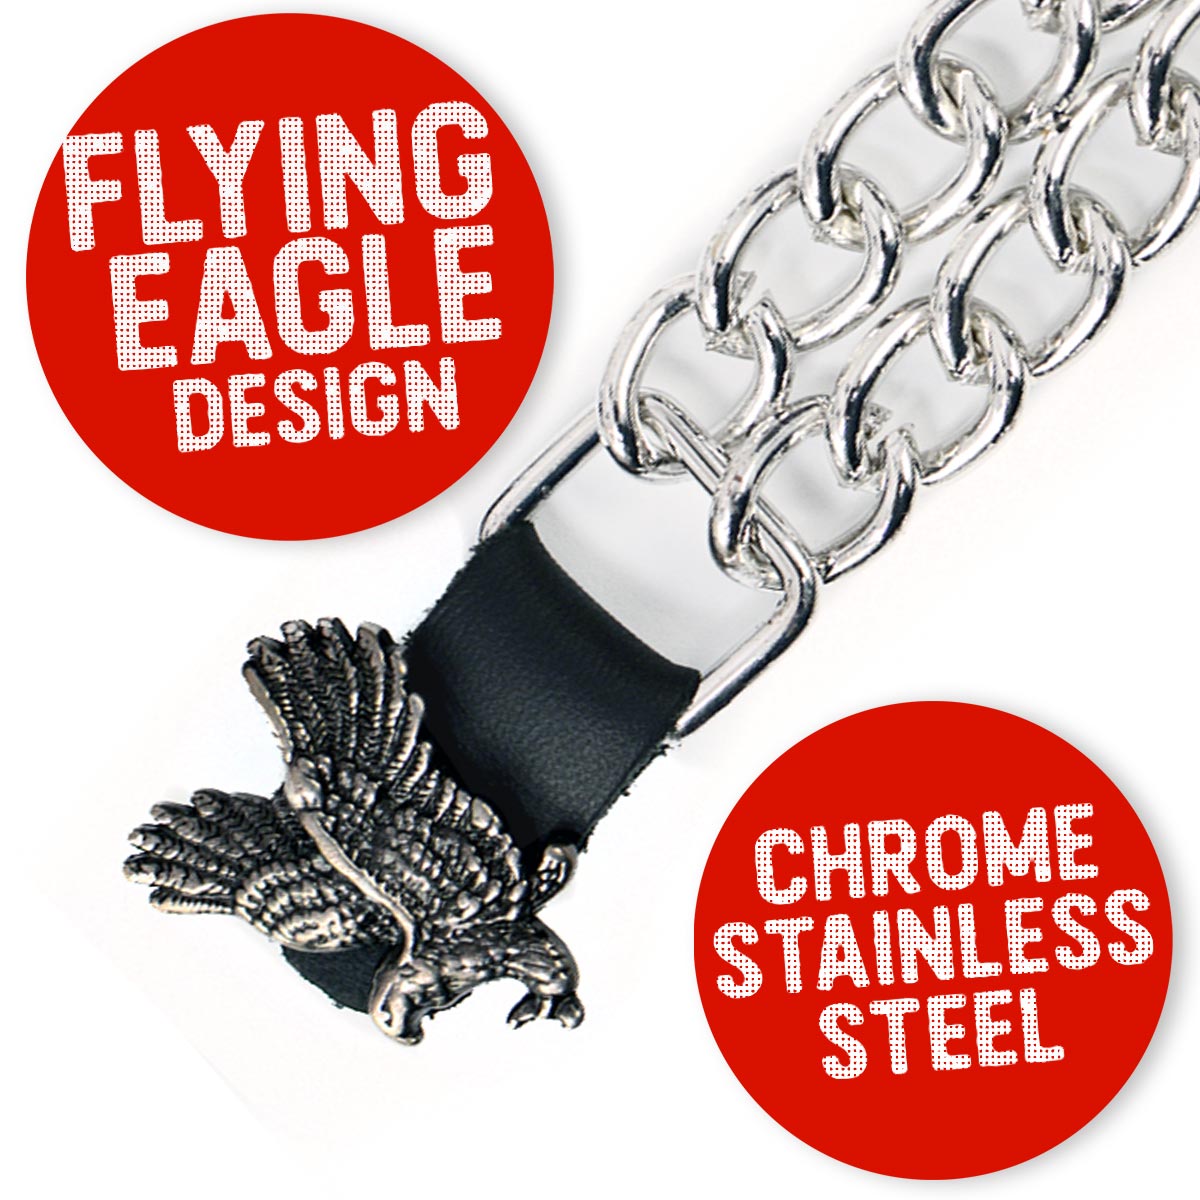 Milwaukee Leather Flying Eagle Medallion Vest Extender - Double Chrome Chains Genuine Leather 6.5" Extension 4-PCS MLA6003SET